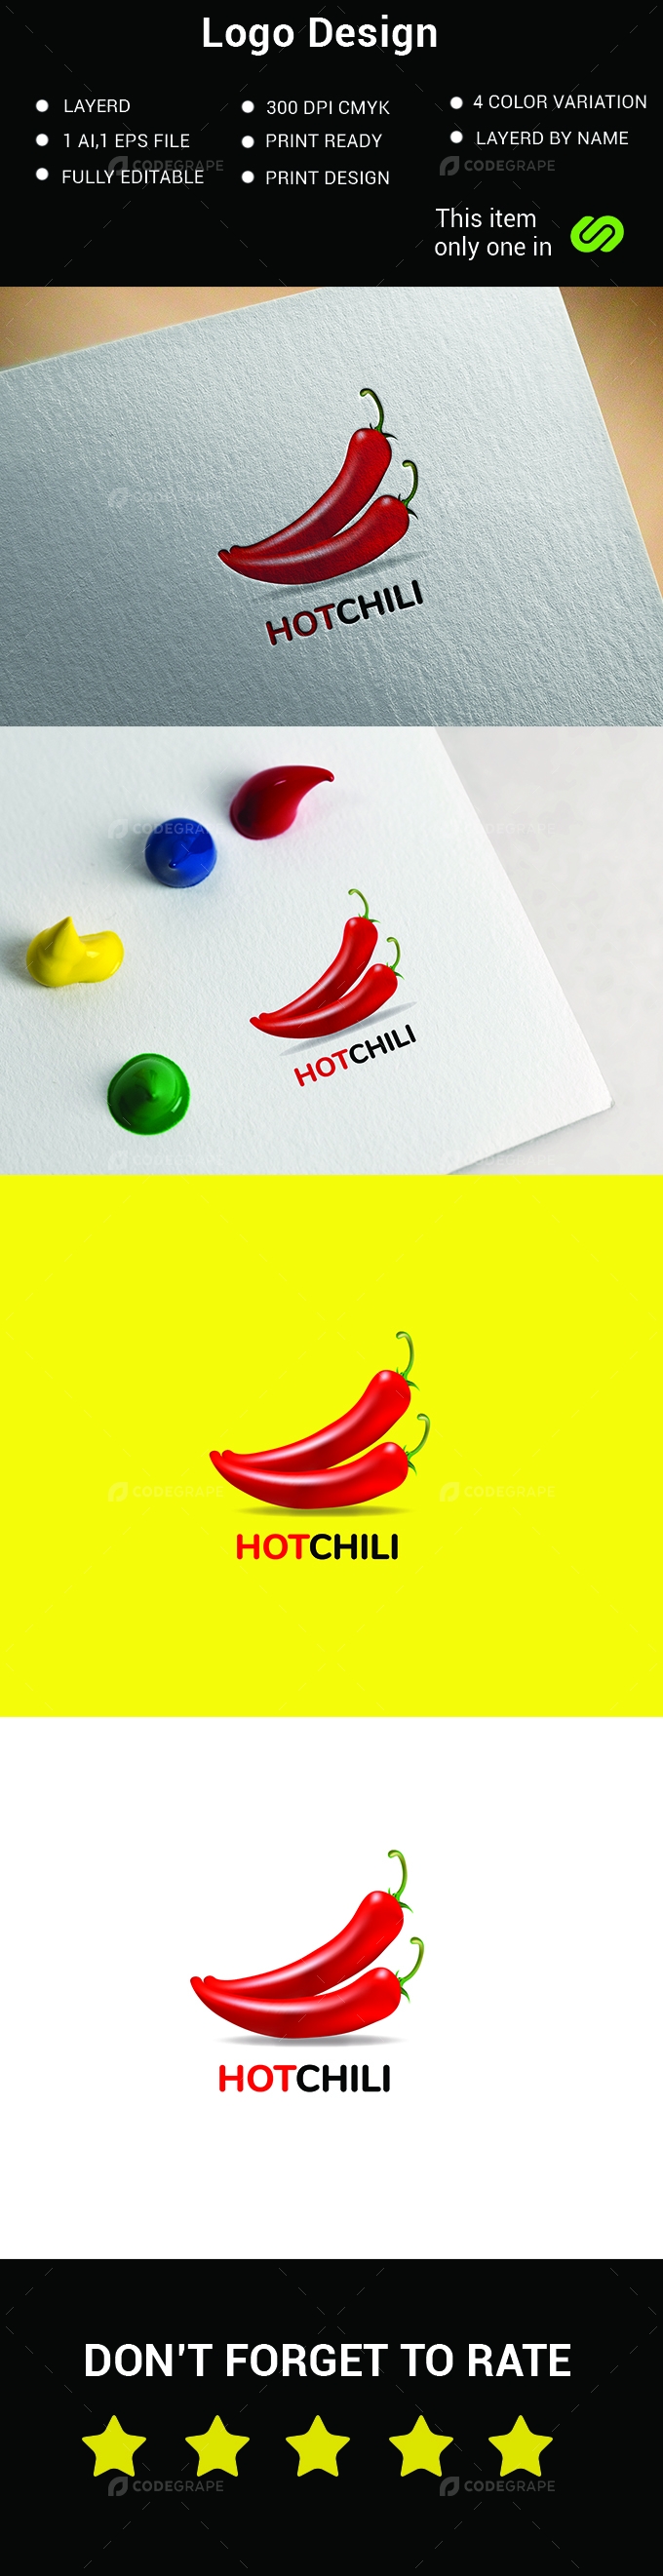 Hotchili Logo Design